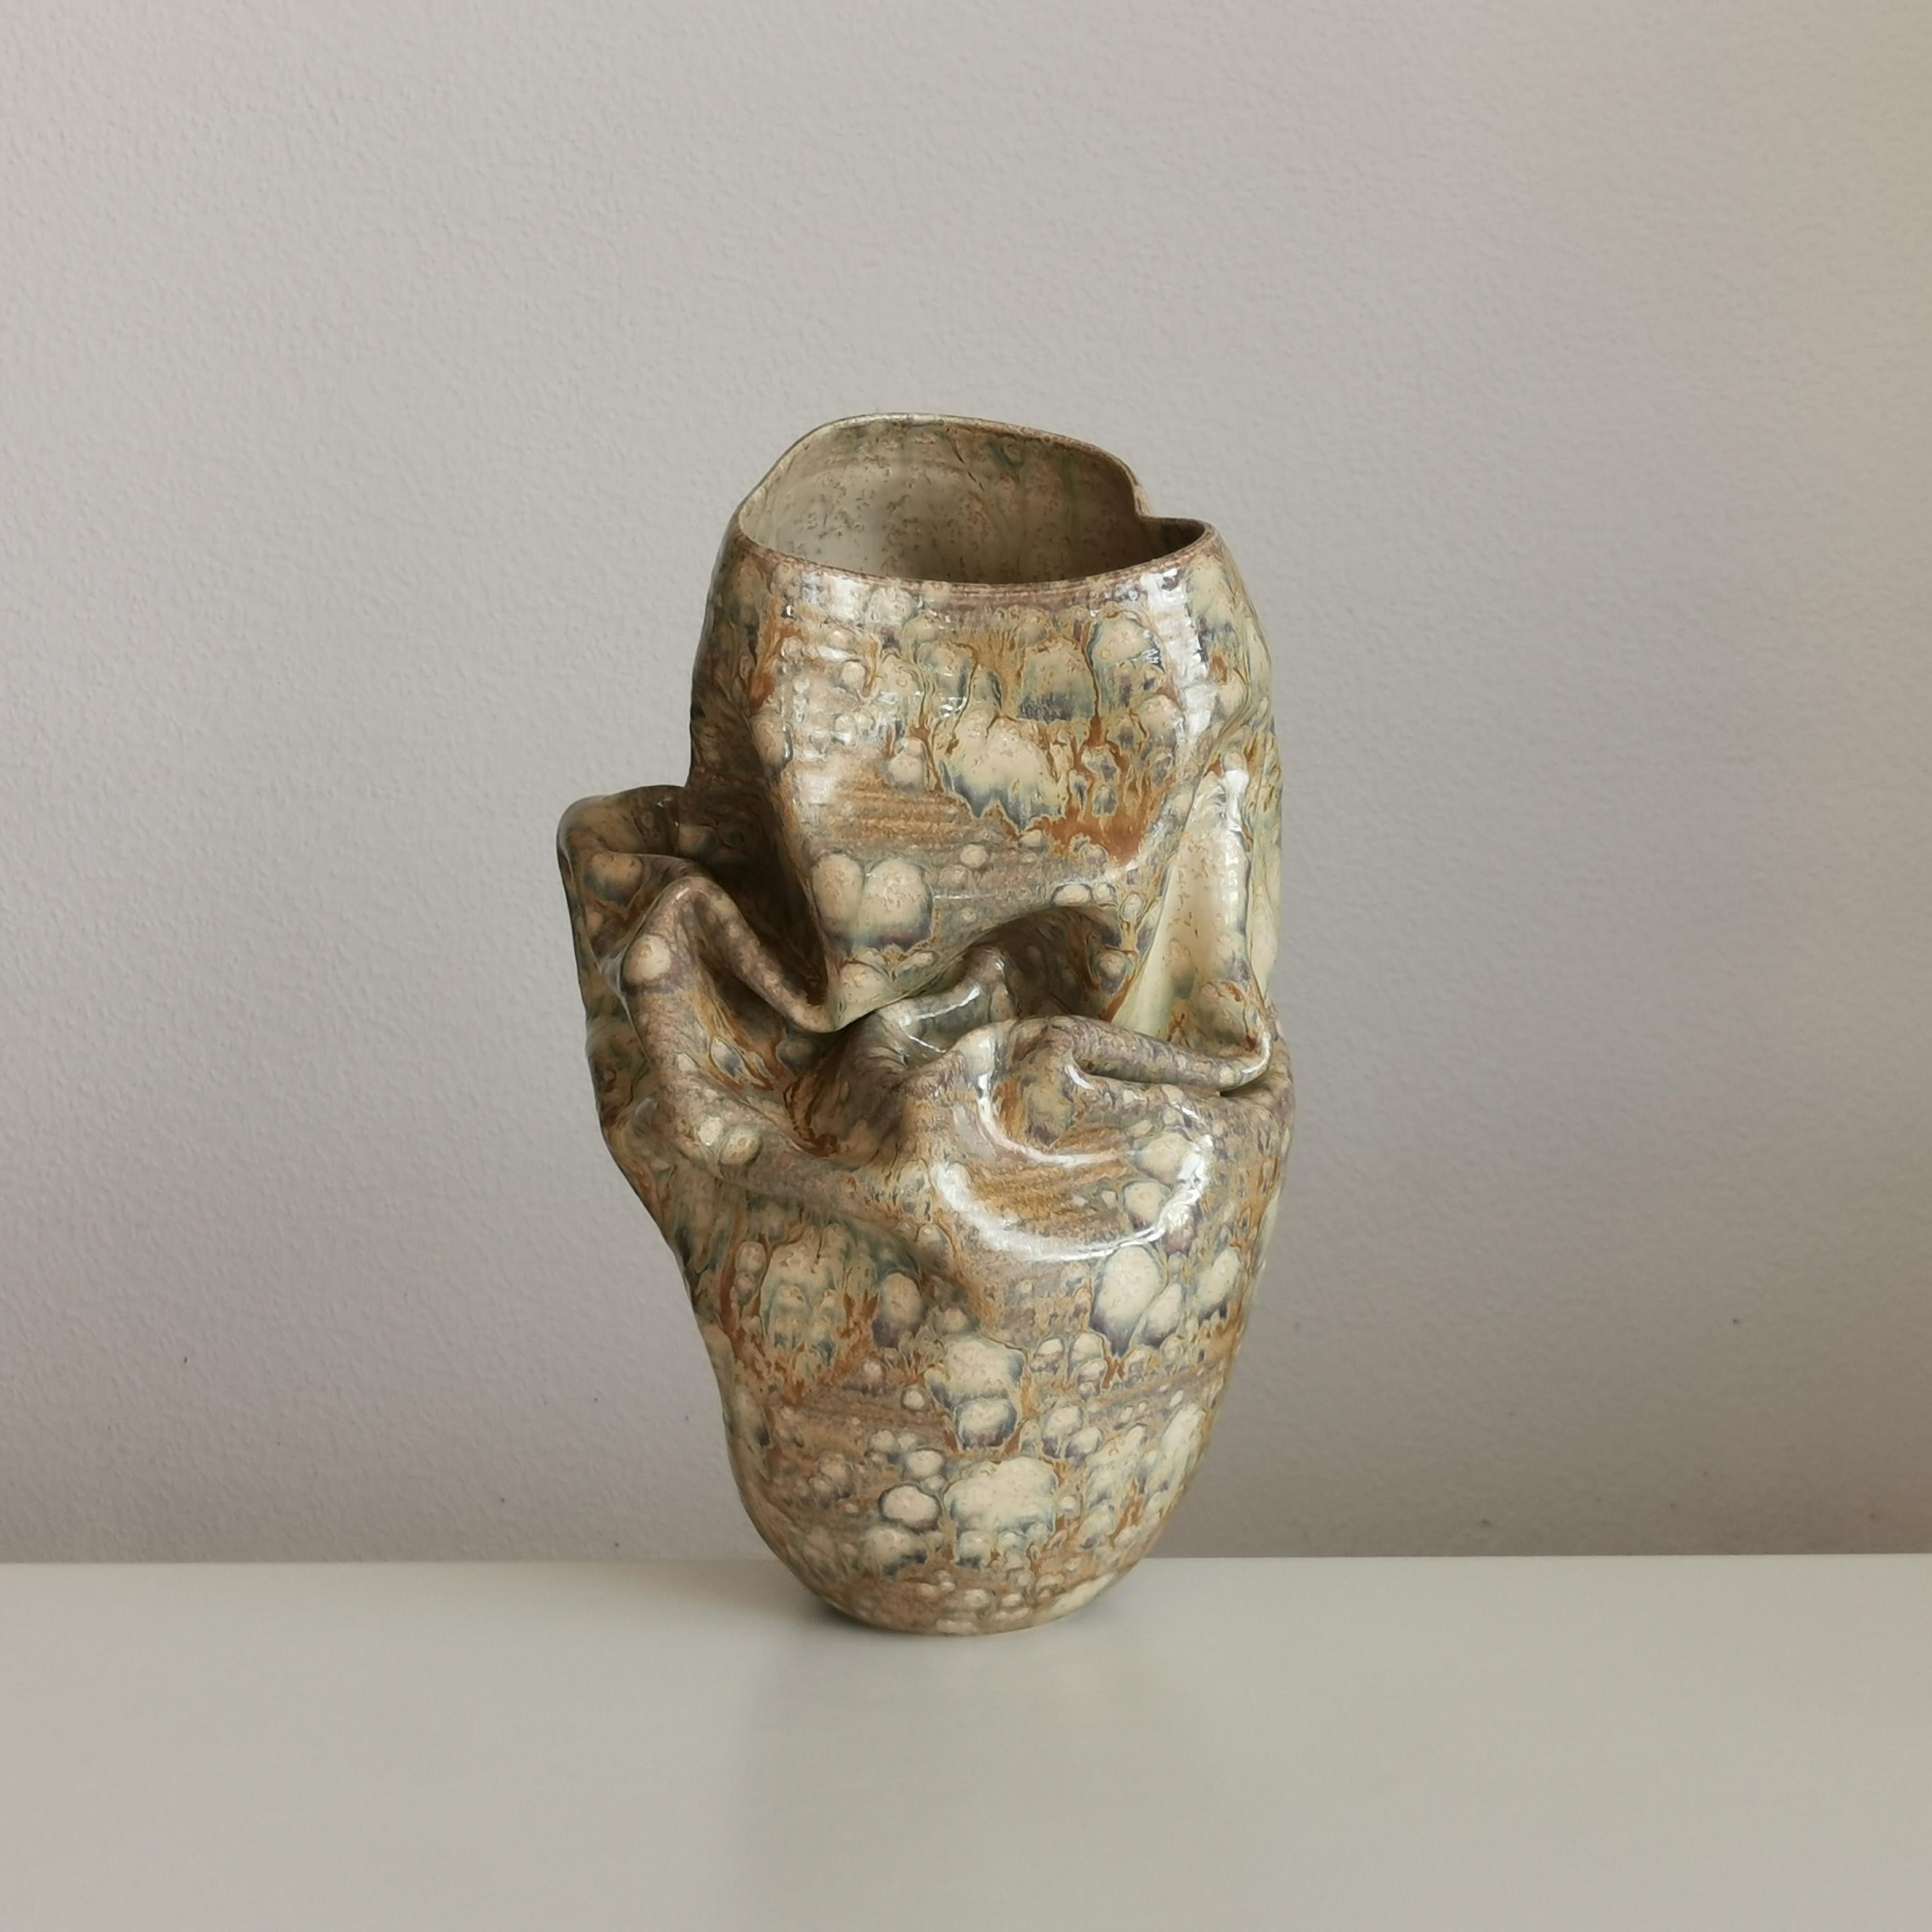 Organic Modern Medium Collapsed Crumpled Form, Desert Dusk, Vessel No.127, Ceramic Sculpture For Sale